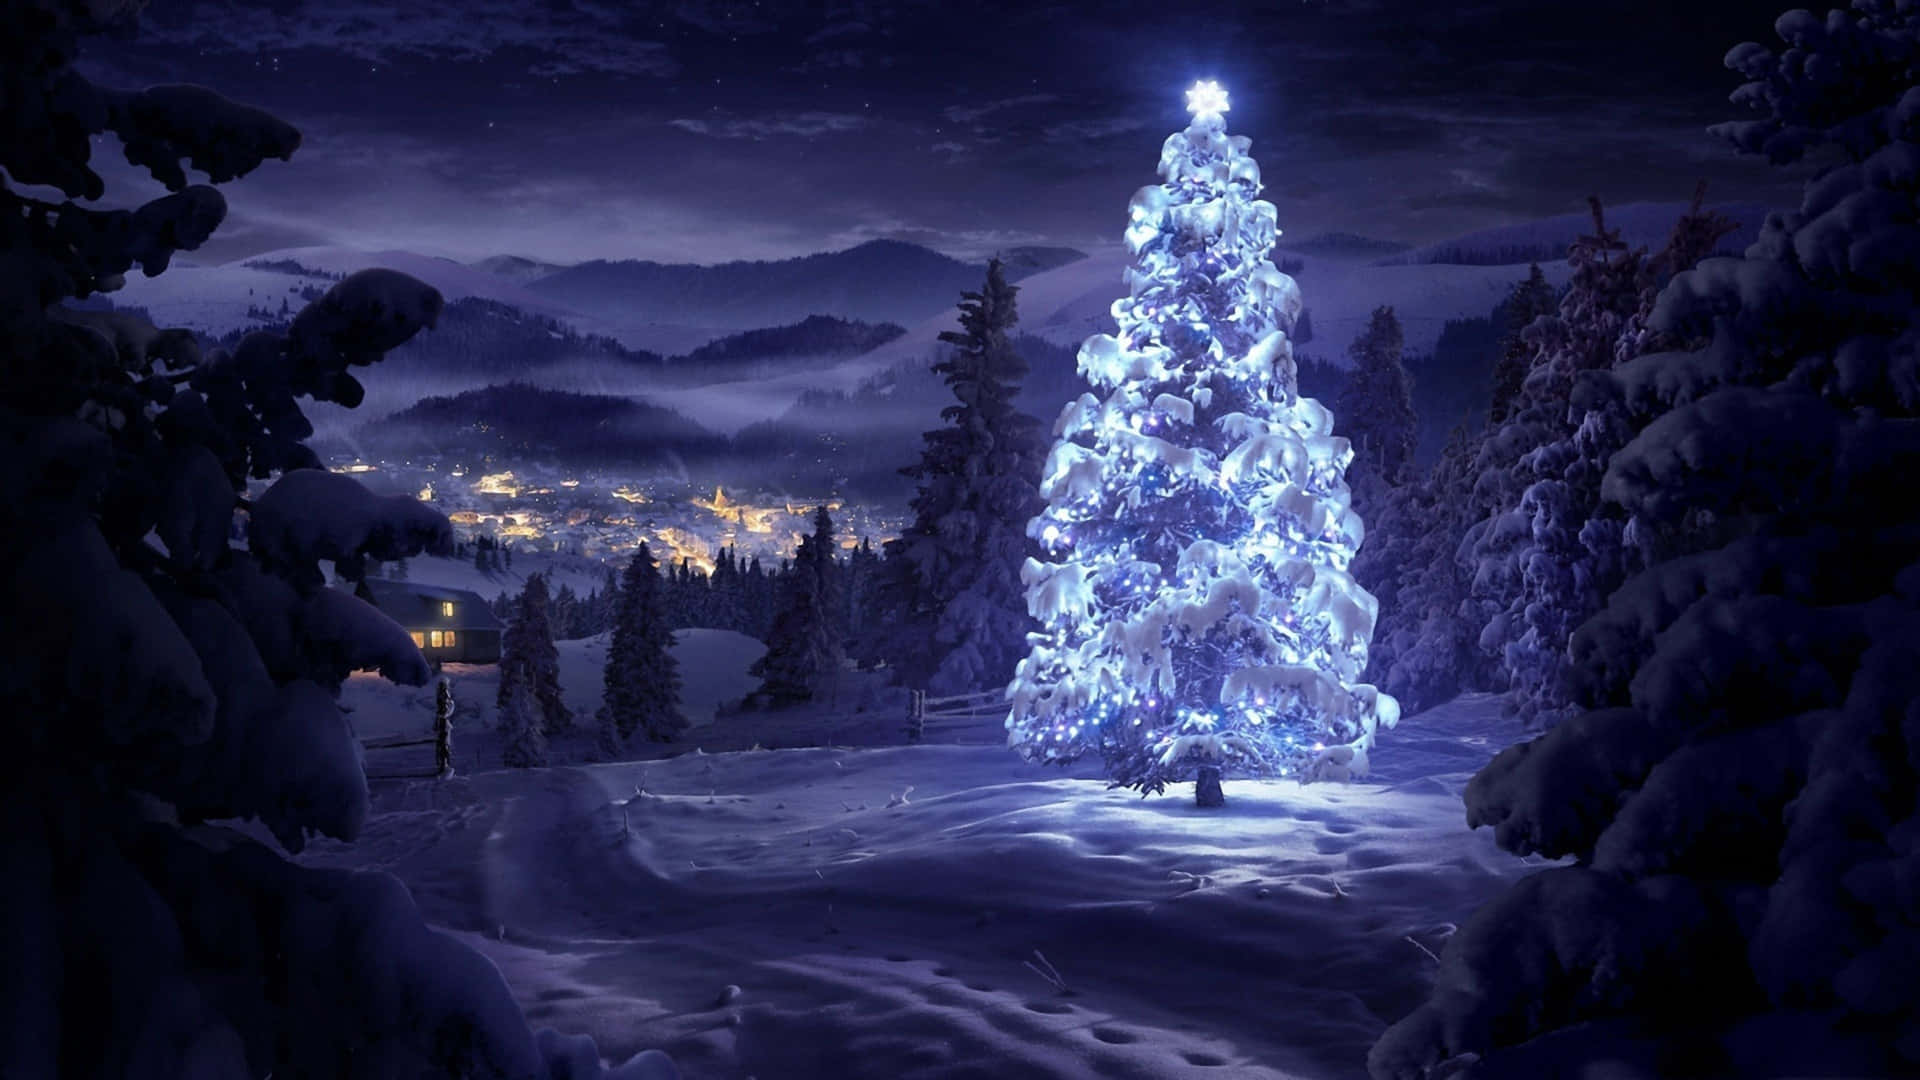 Cool Christmas Eve With White Christmas Tree